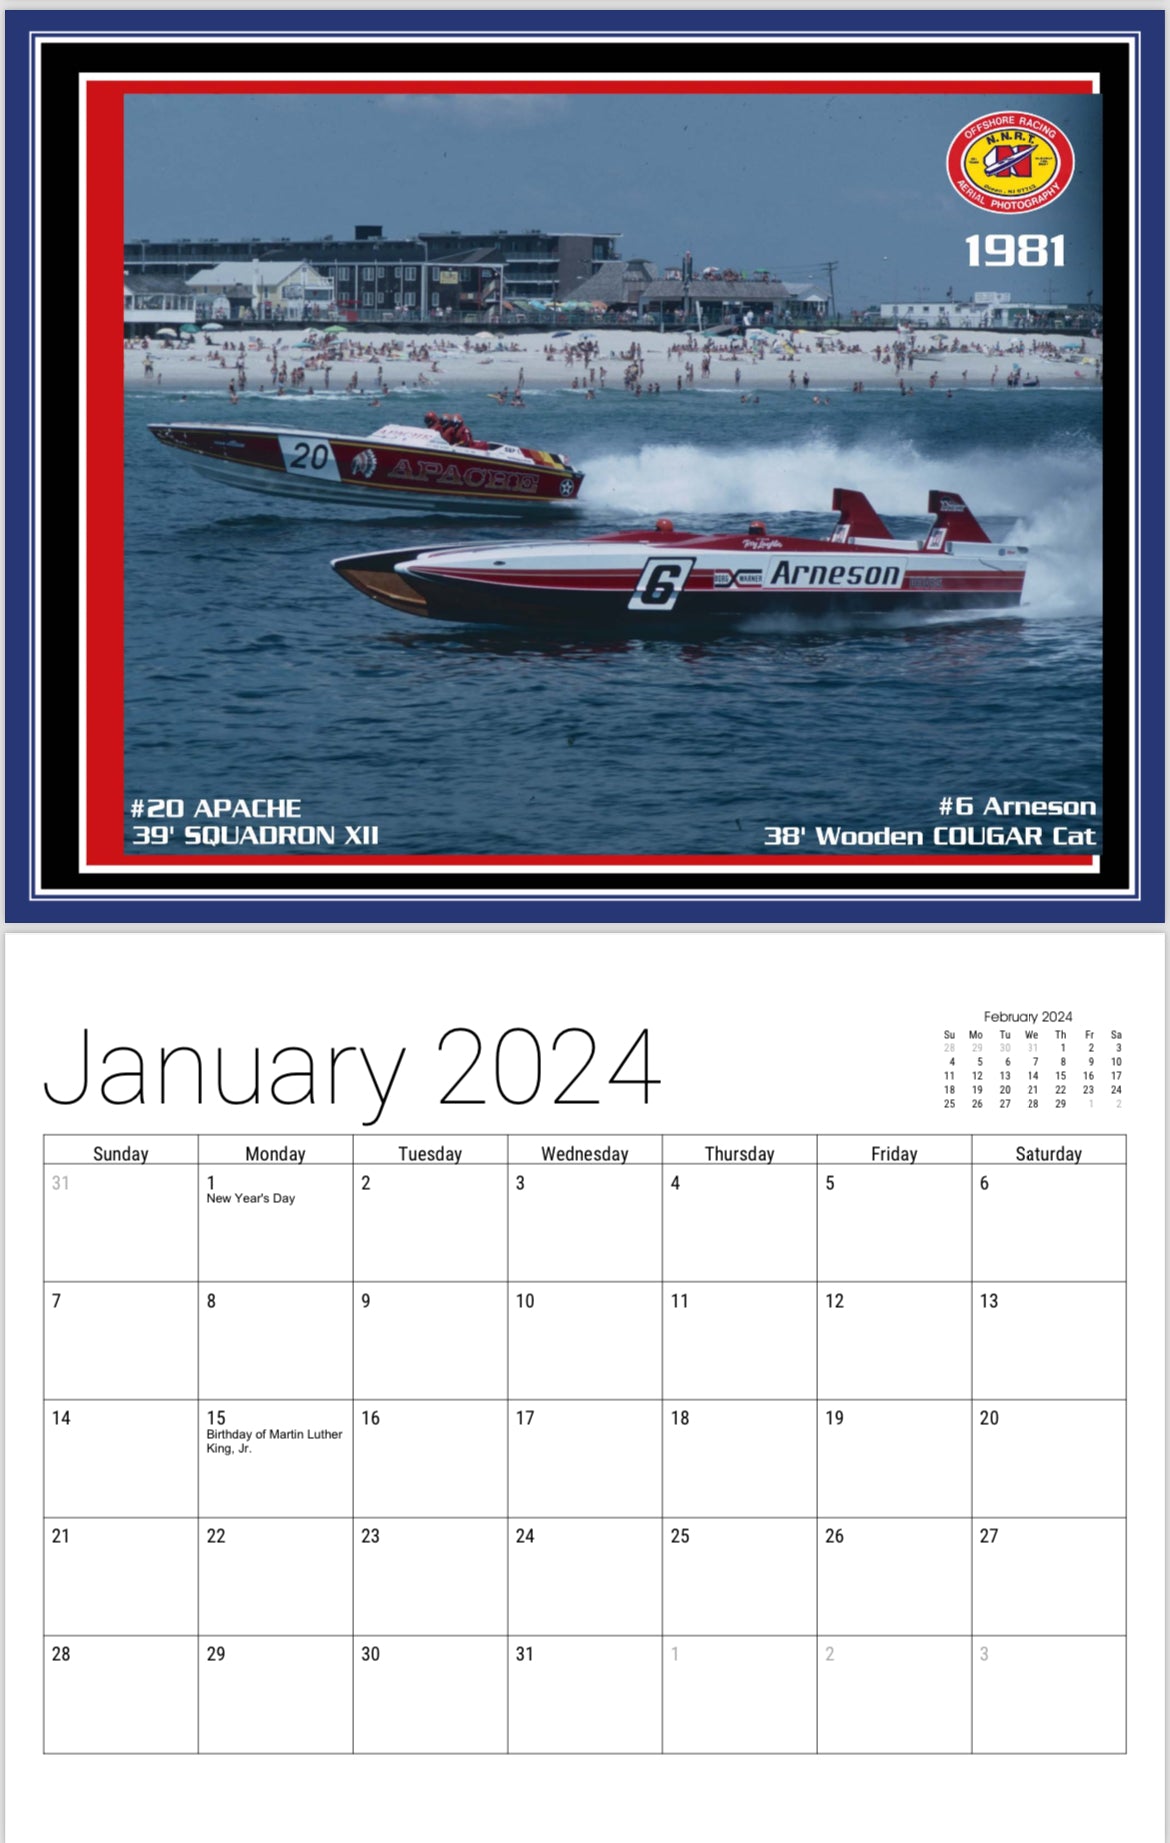 2024 NNRT Offshore Classic Calendar 11x14